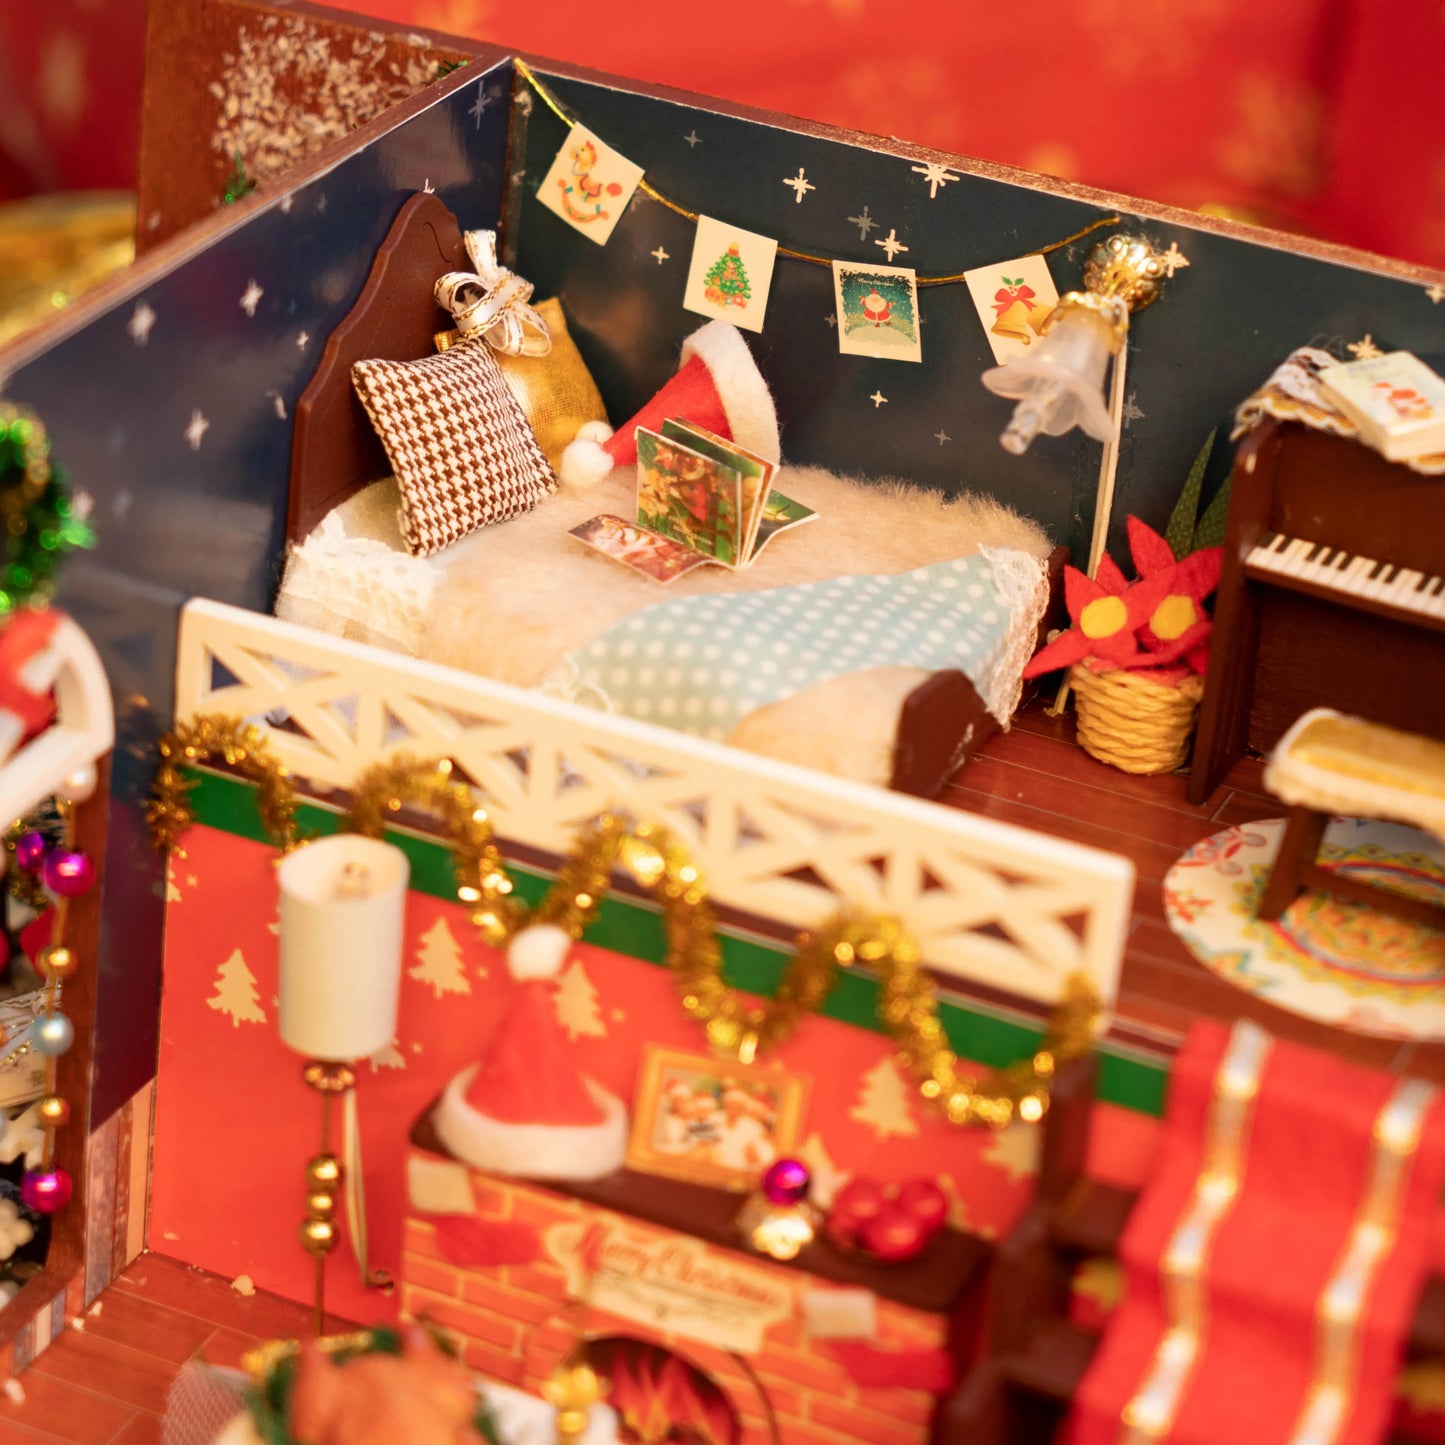 DIY Dollhouse Christmas Gift New Year Kit Miniature House Model @anita.fiberartist